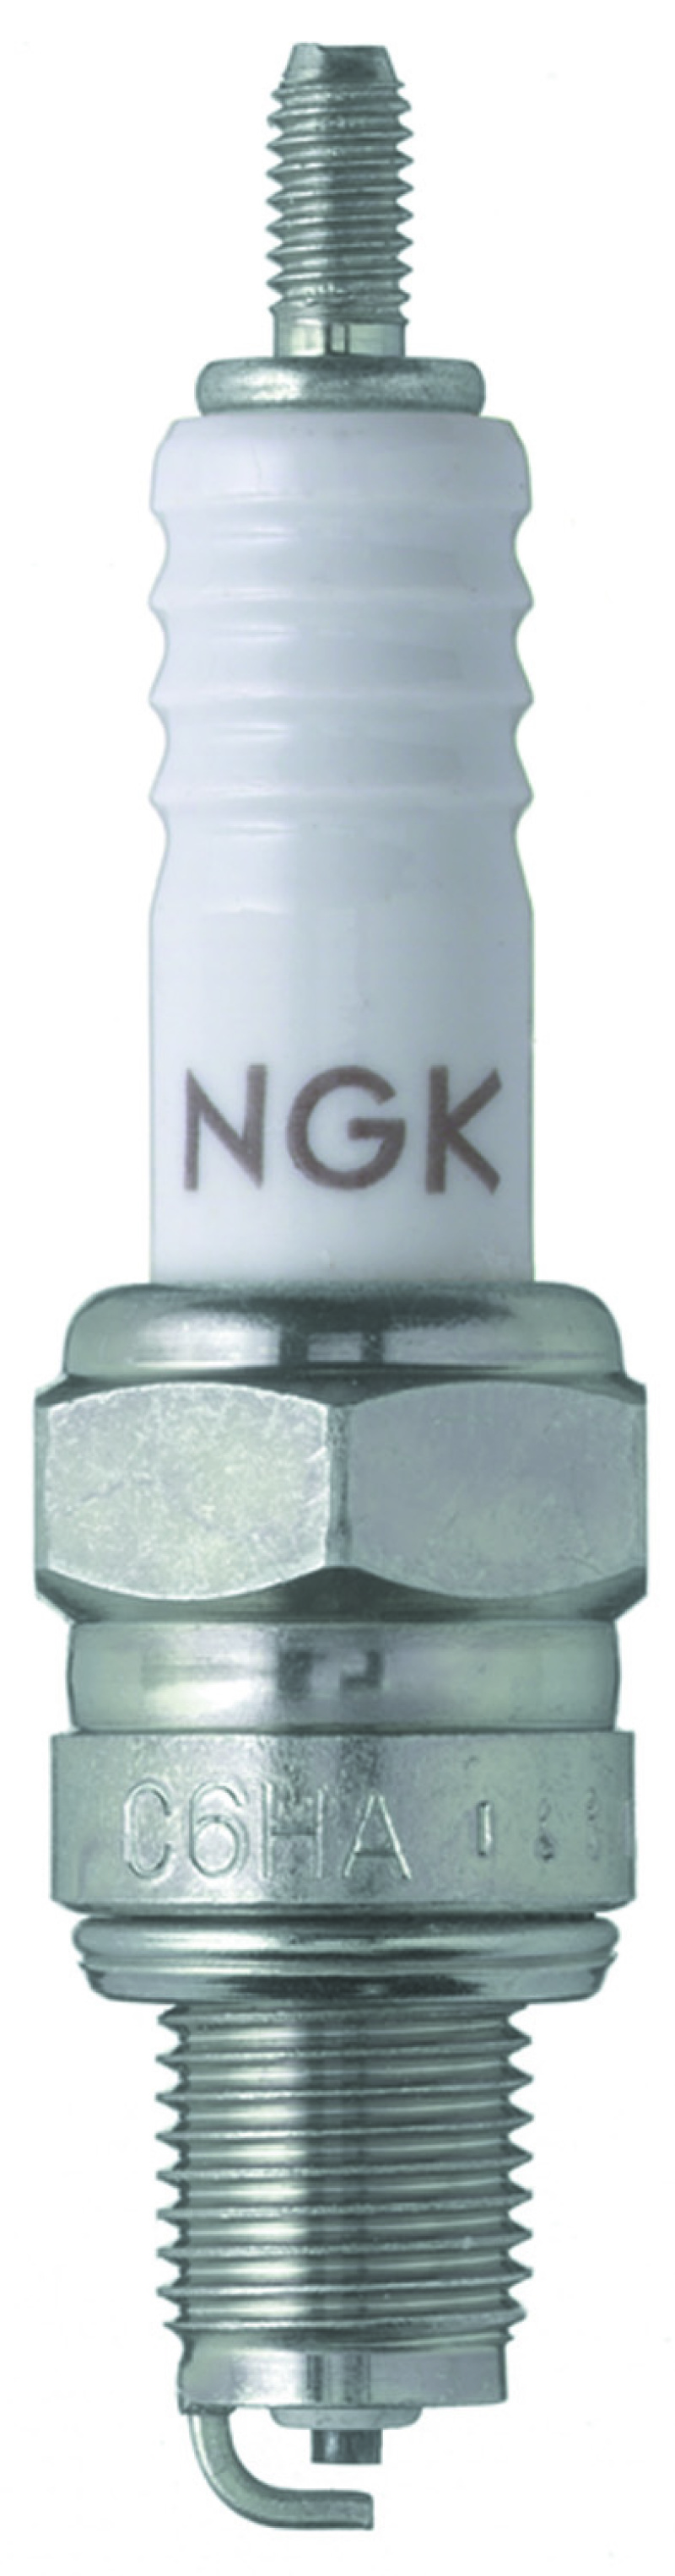 NGK Standard Spark Plug Box of 10 (C8HA) - 2168